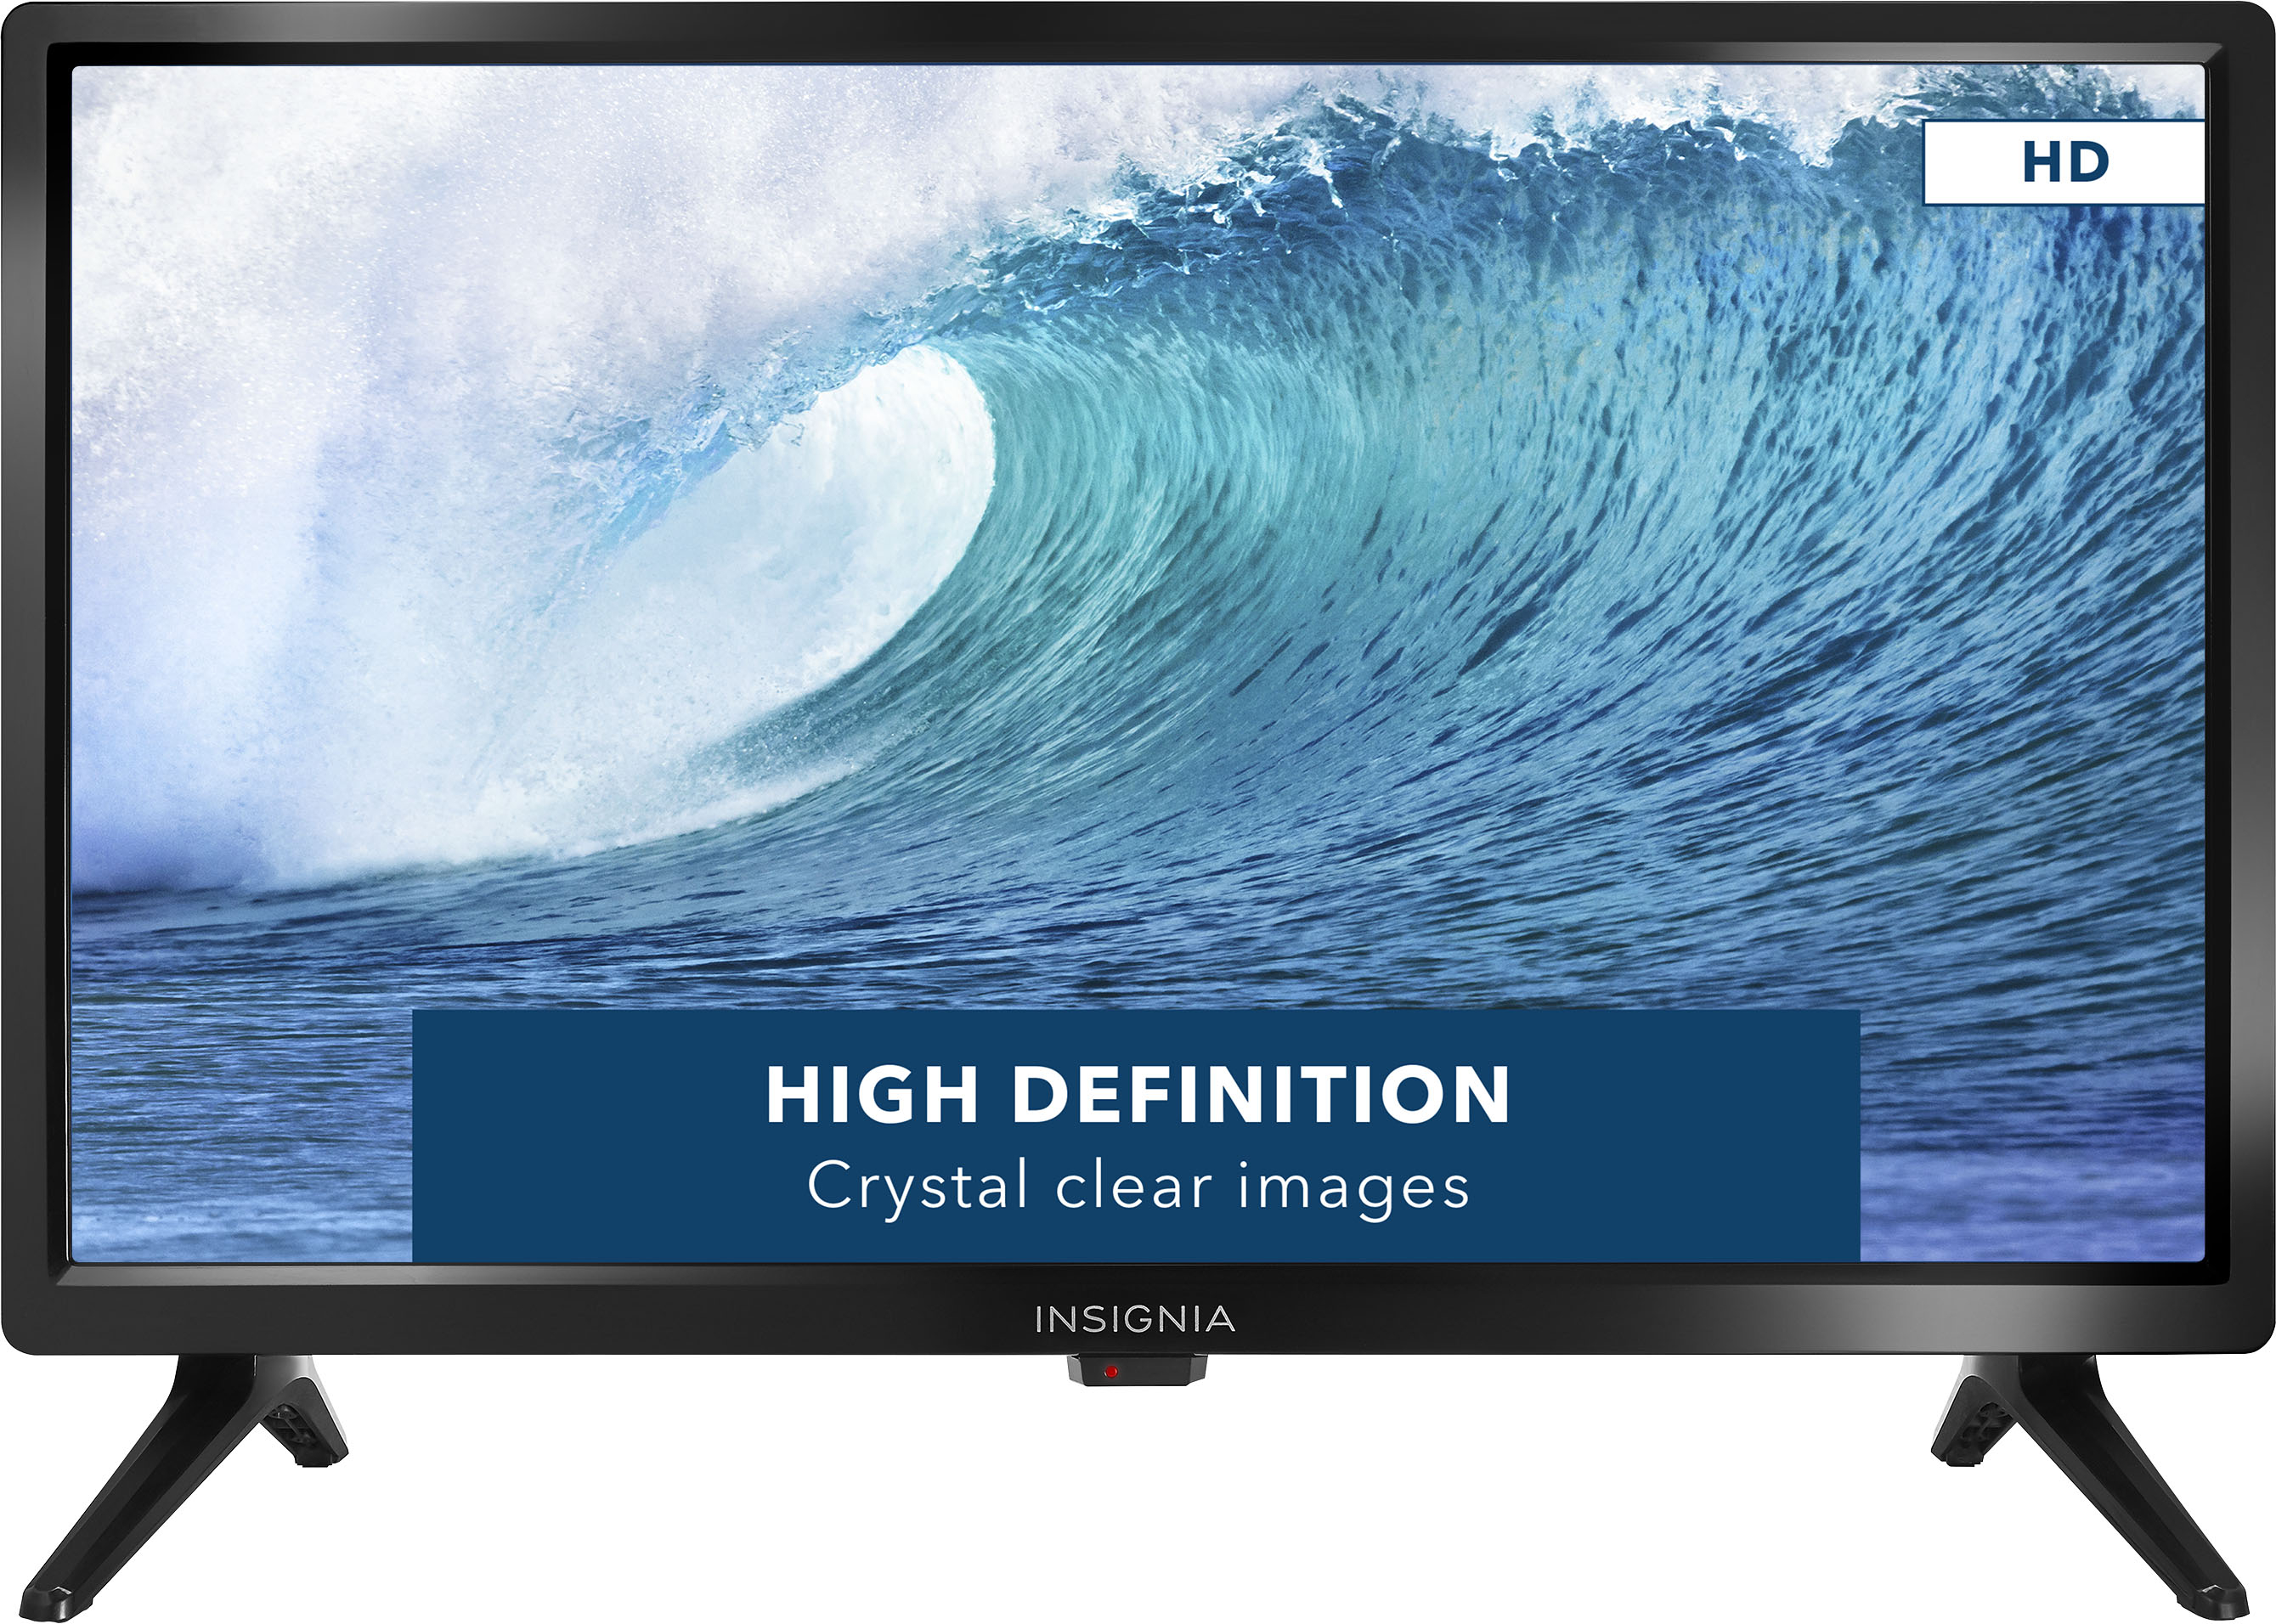 TV Samsung 19 Pulgadas 720p HD LED LT19E310N